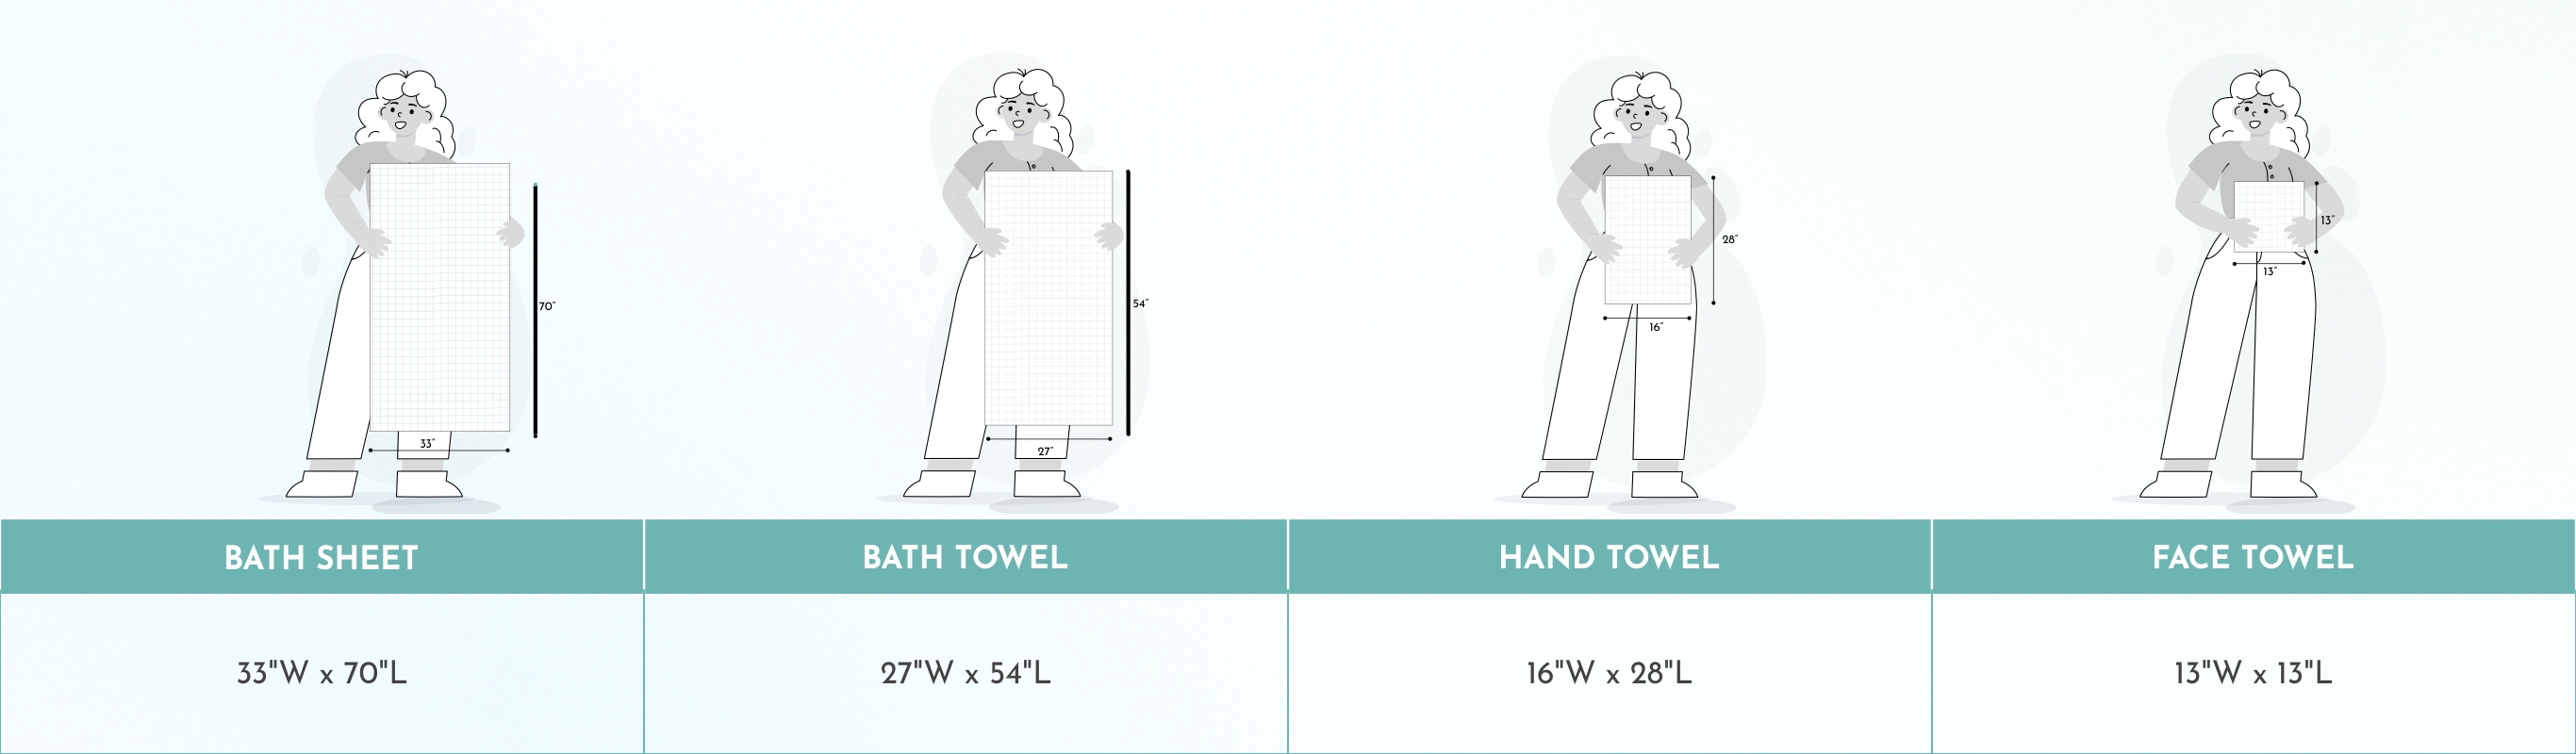 Super Soft Luxury Hand Towels – California Design Den